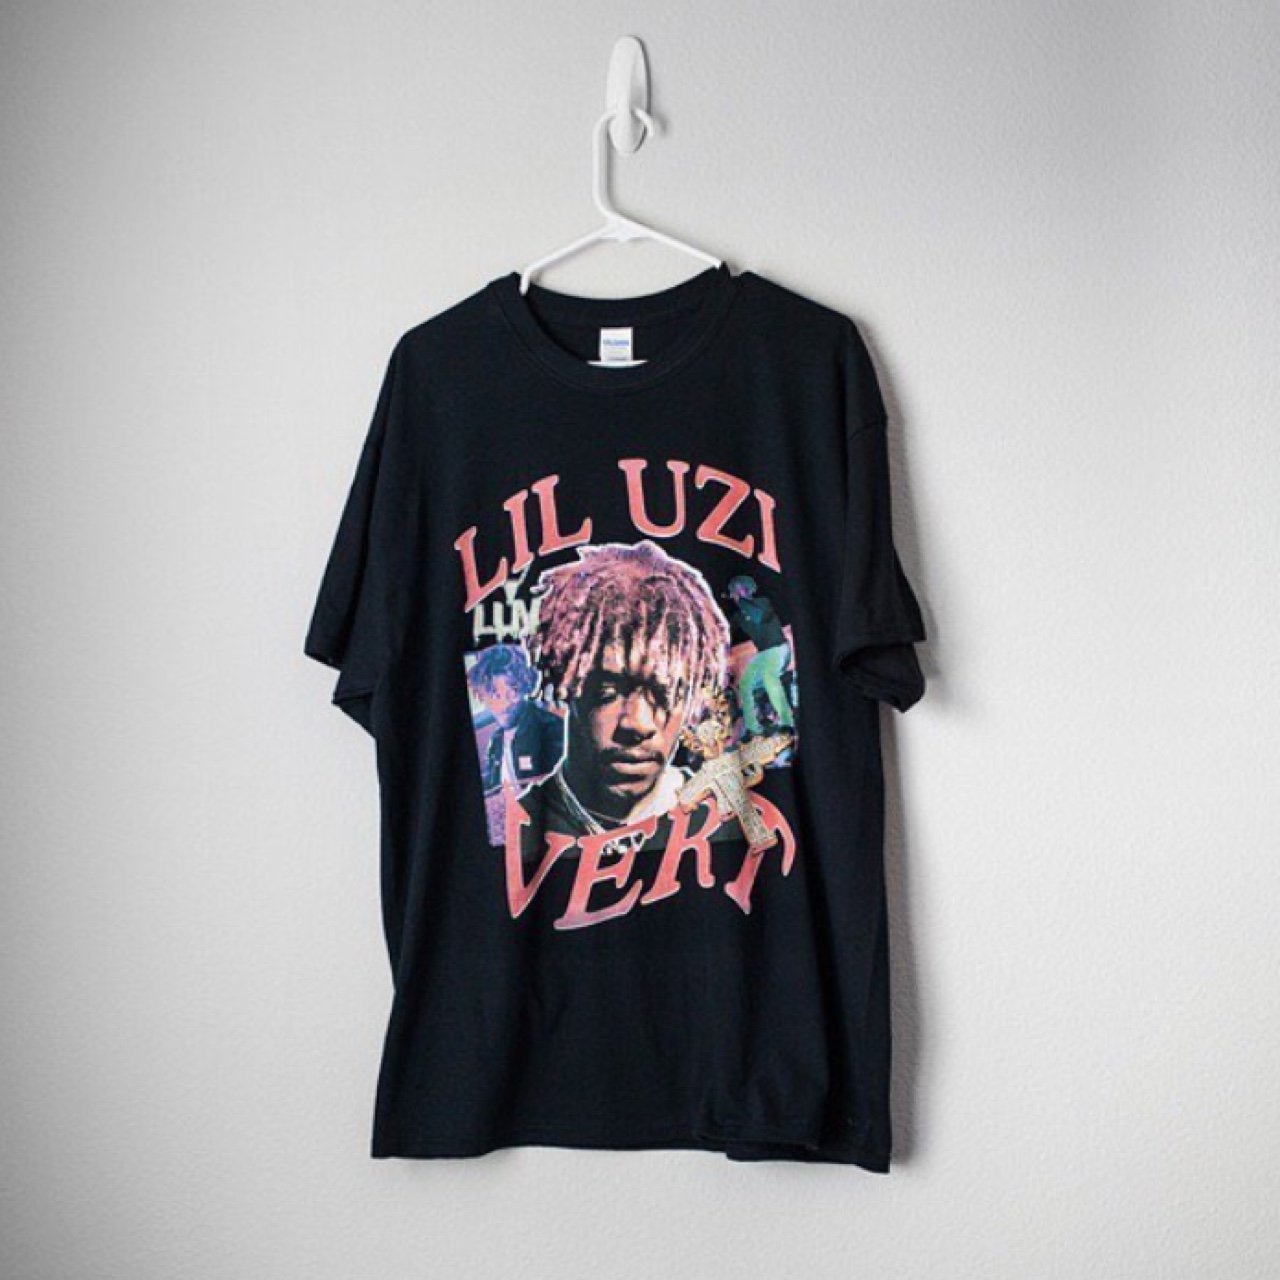 Lil Uzi Vert Vintage Inspired T-Shirt